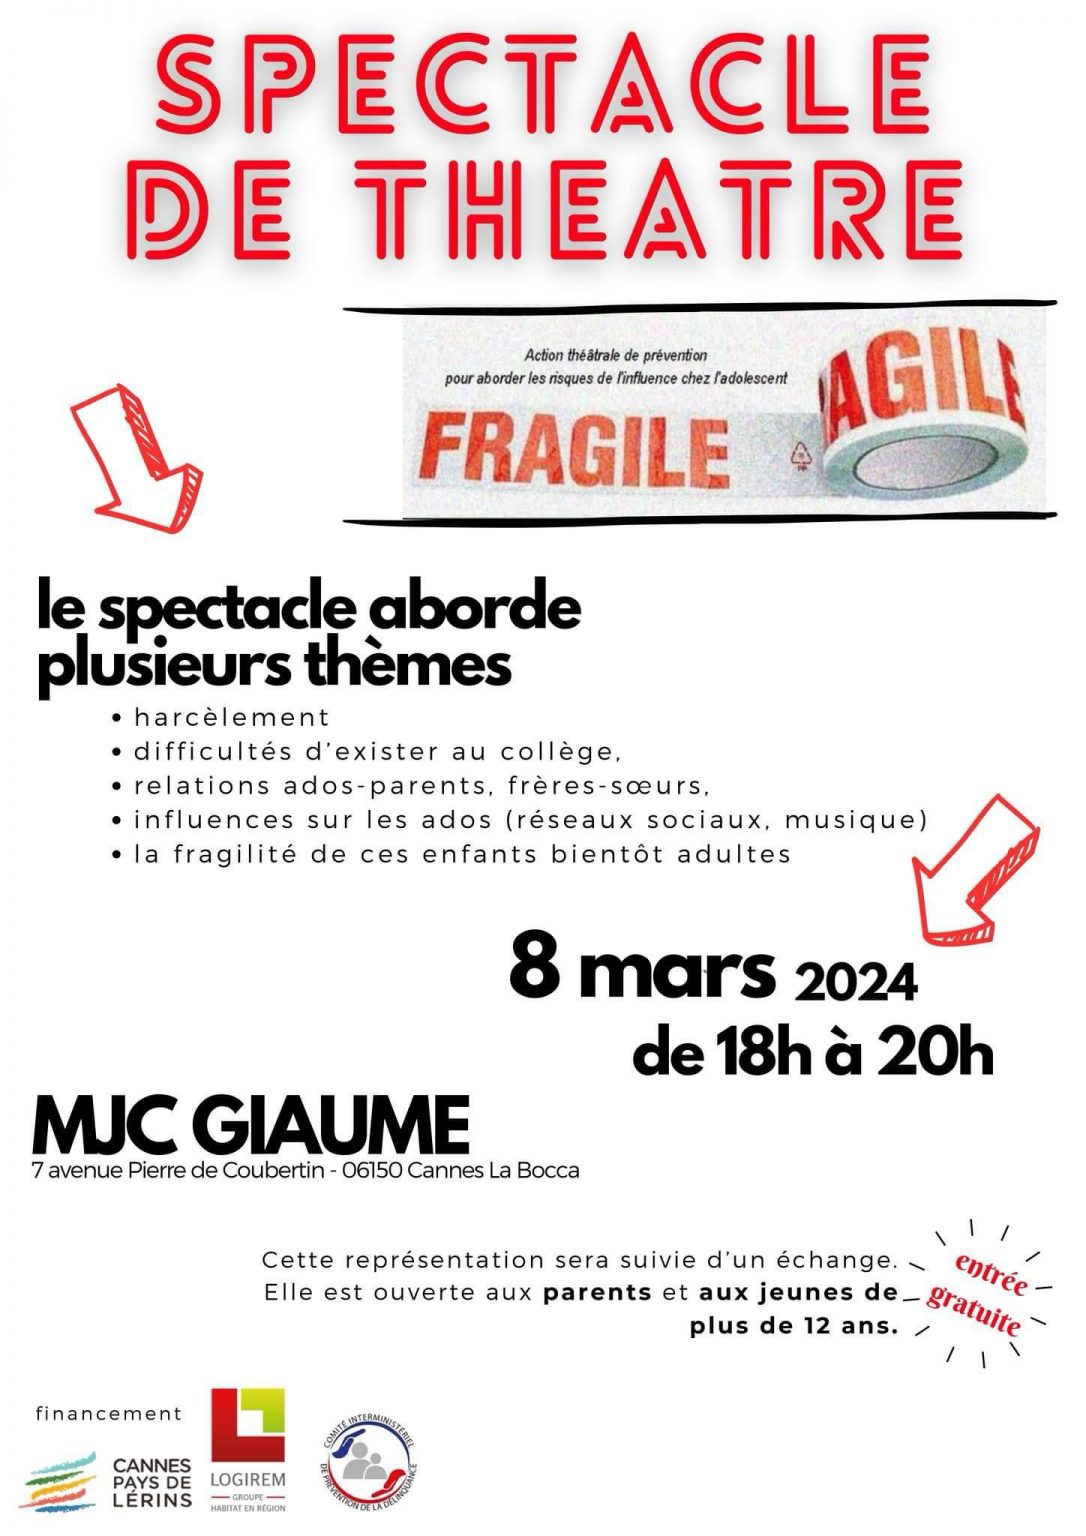 spectacle de theatre Mjc giaume